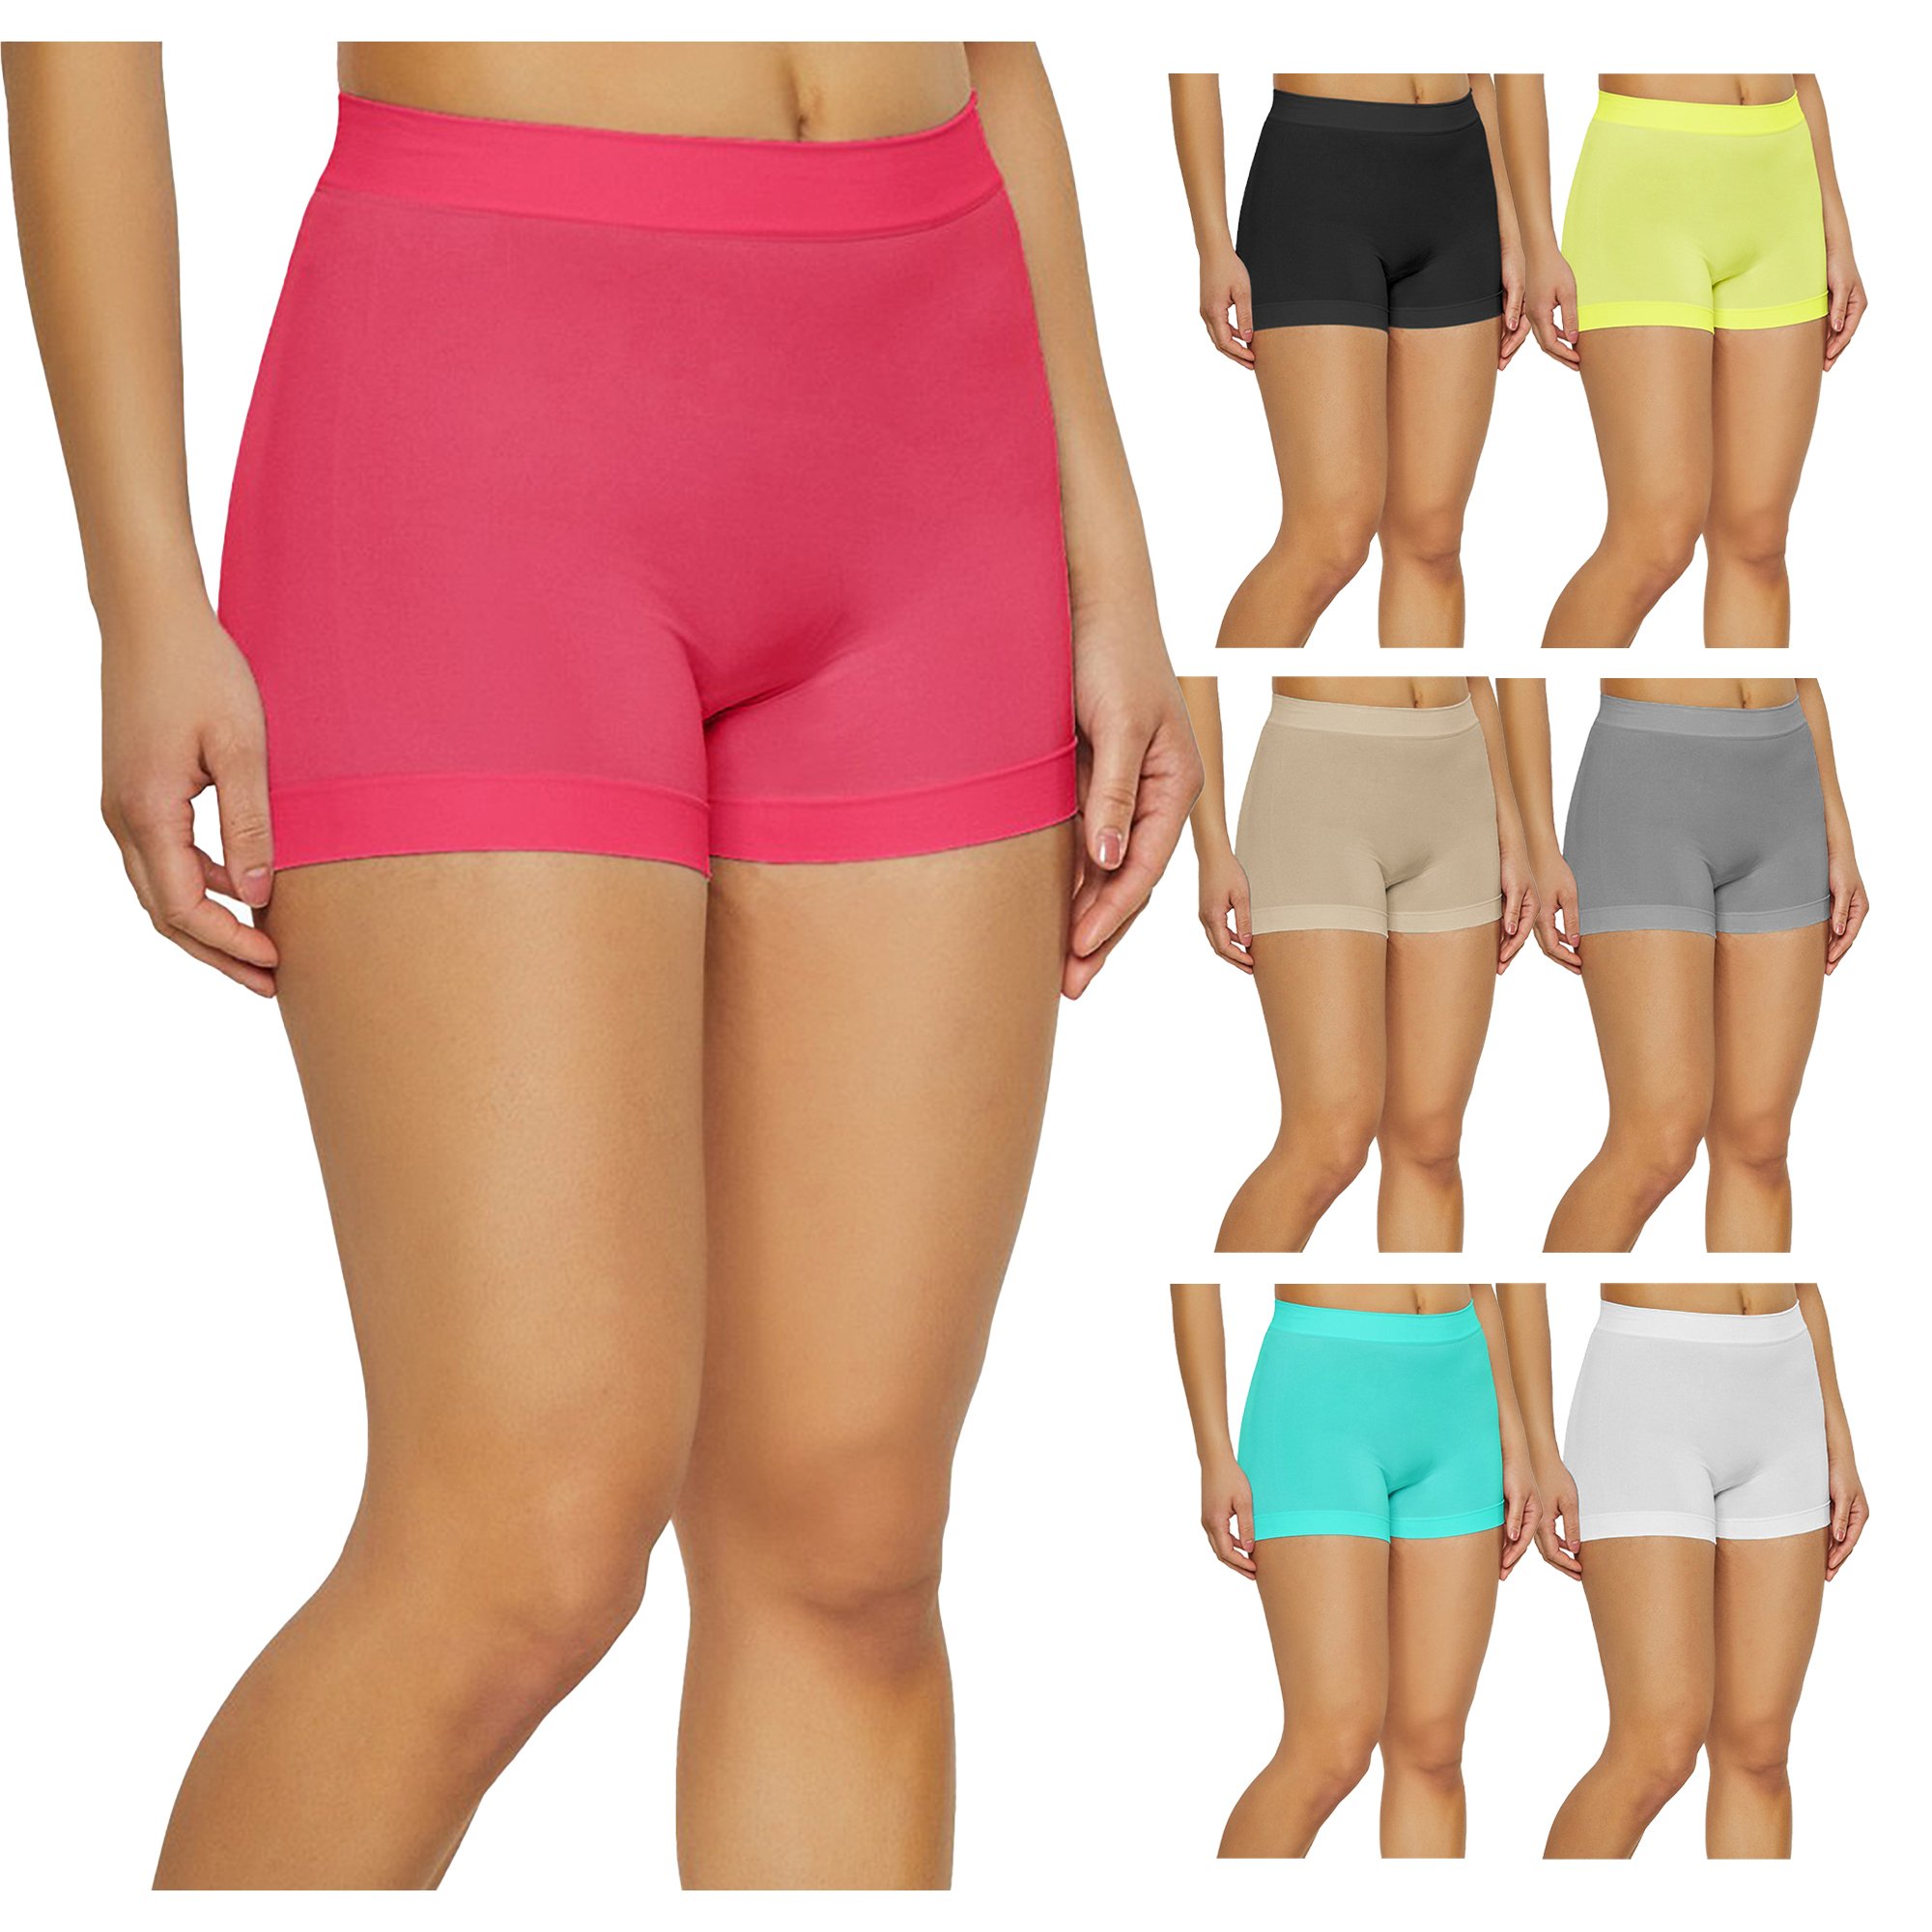 12-Pack Women's High Waisted Biker Bottom Shorts For Yoga Gym Running Ladies Pants - BLACK, XS